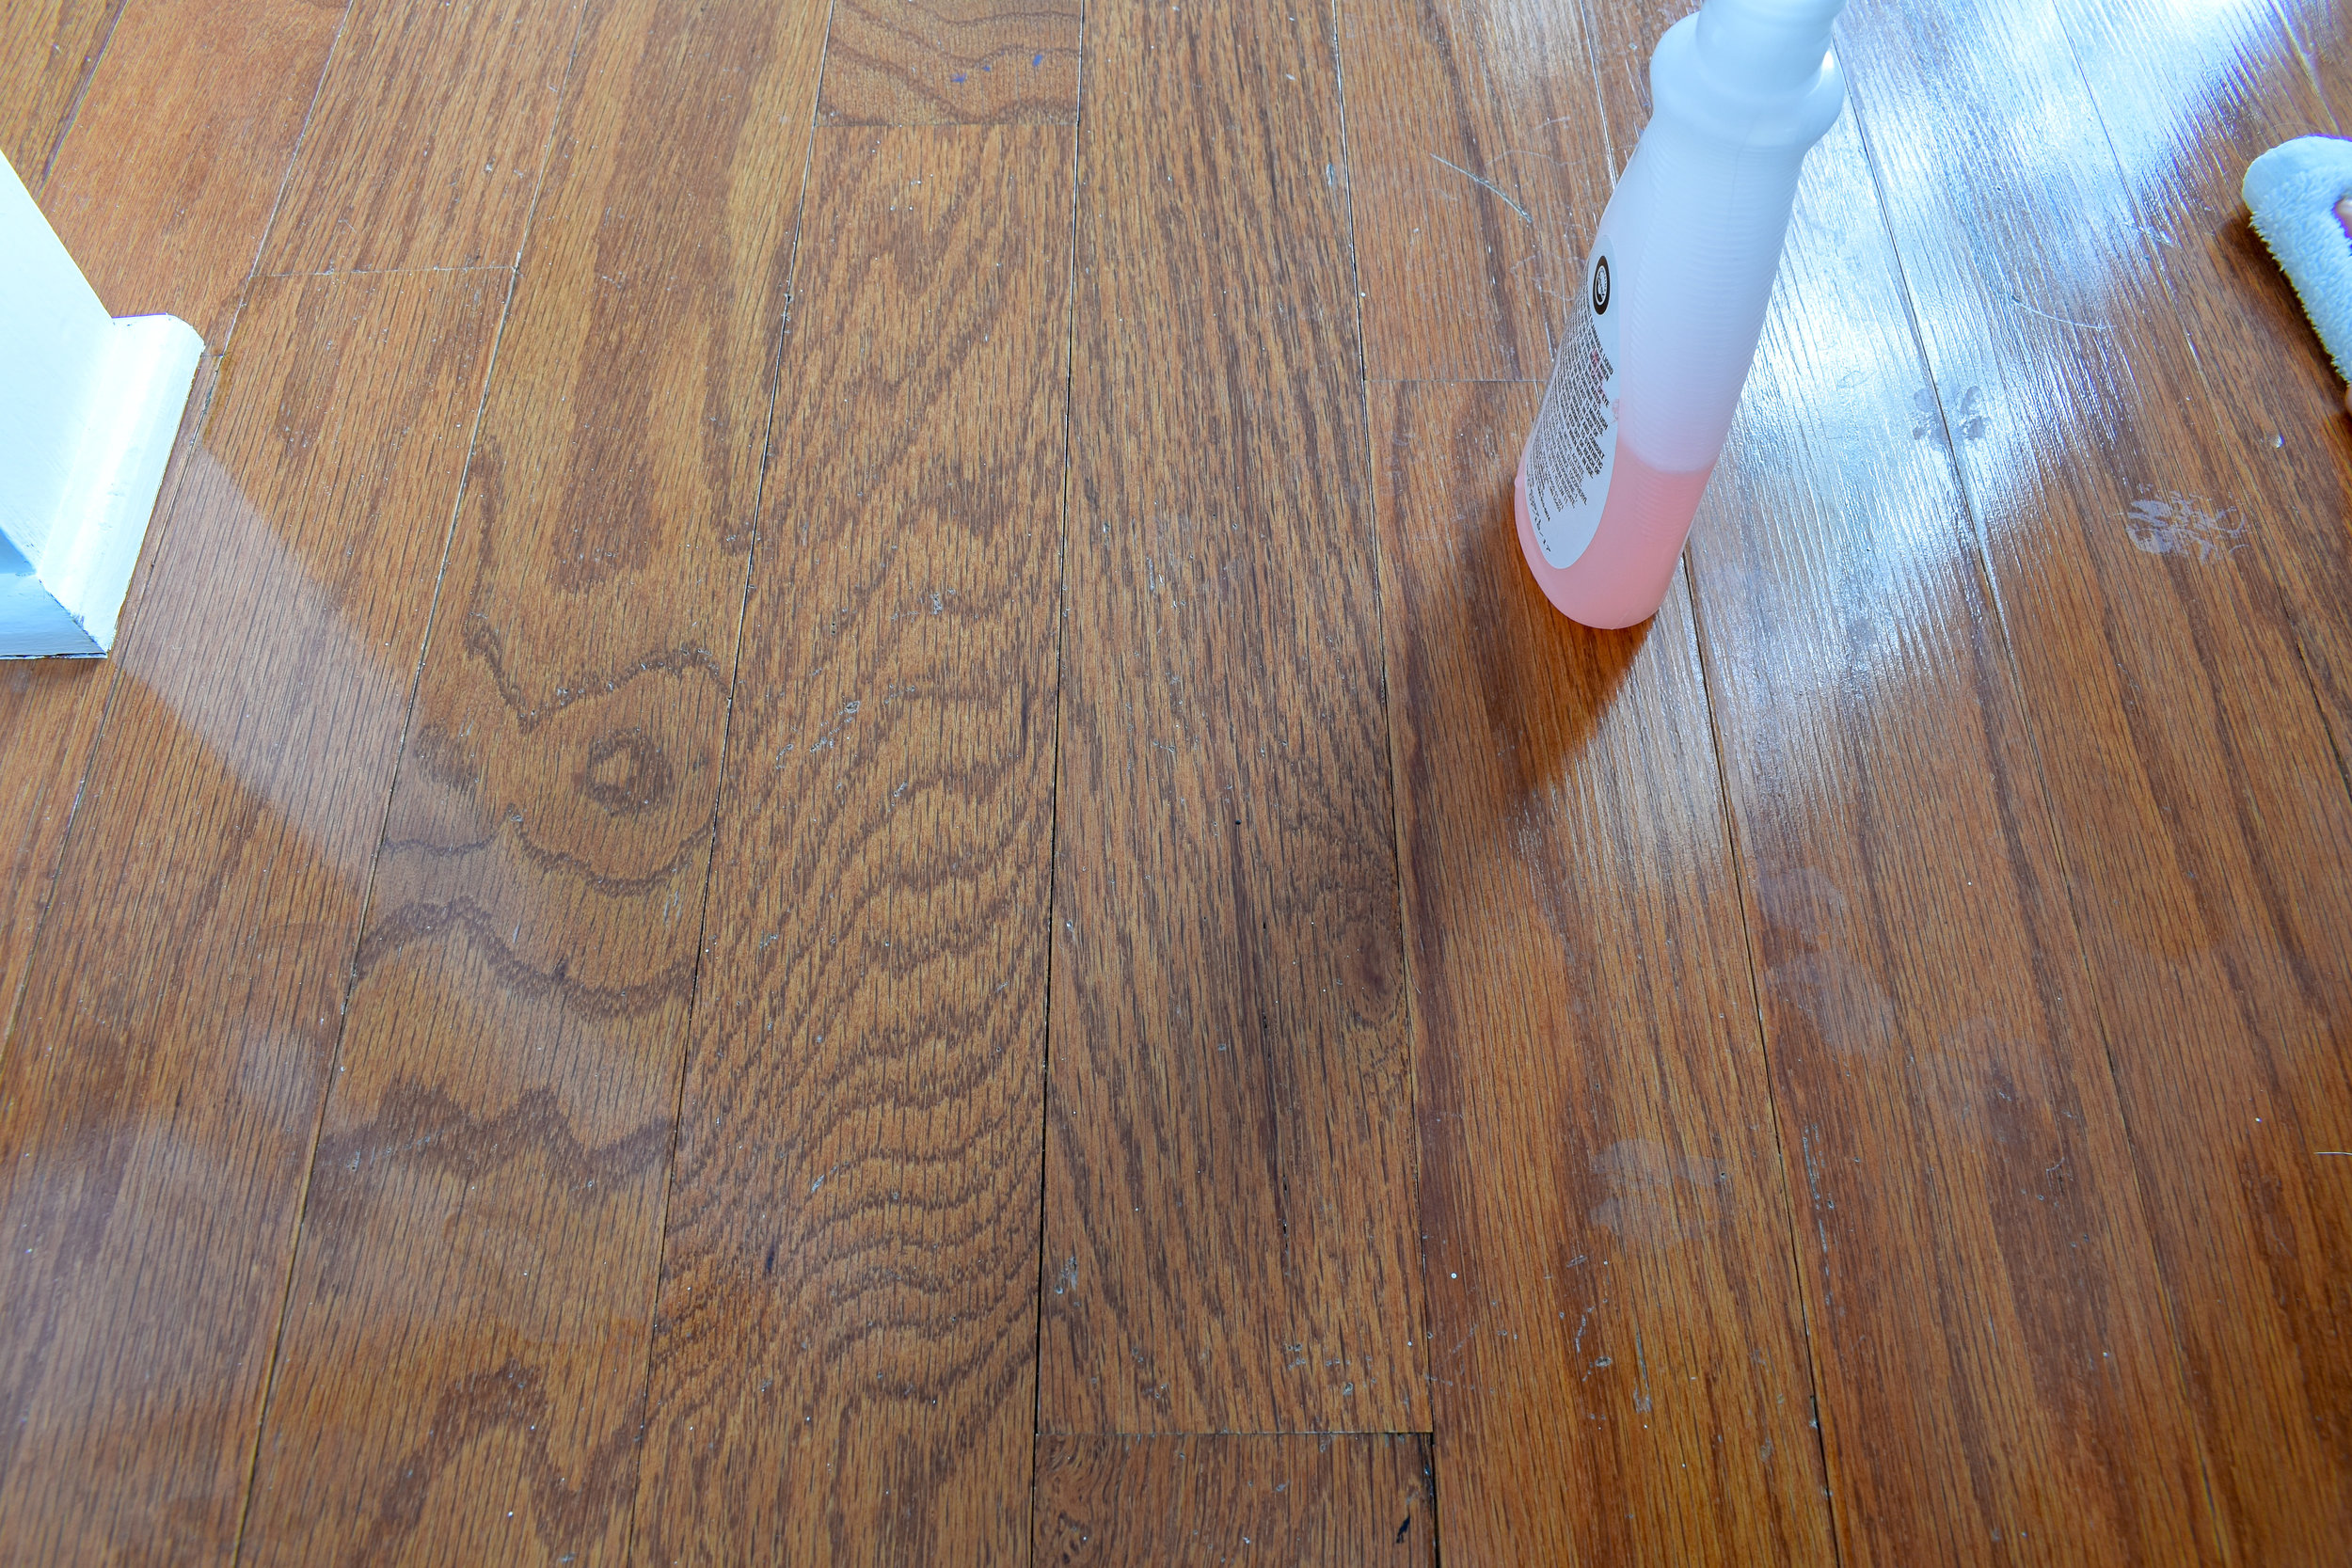 How To Make Old Hardwood Floors Shine, Best Varnish For Hardwood Floors